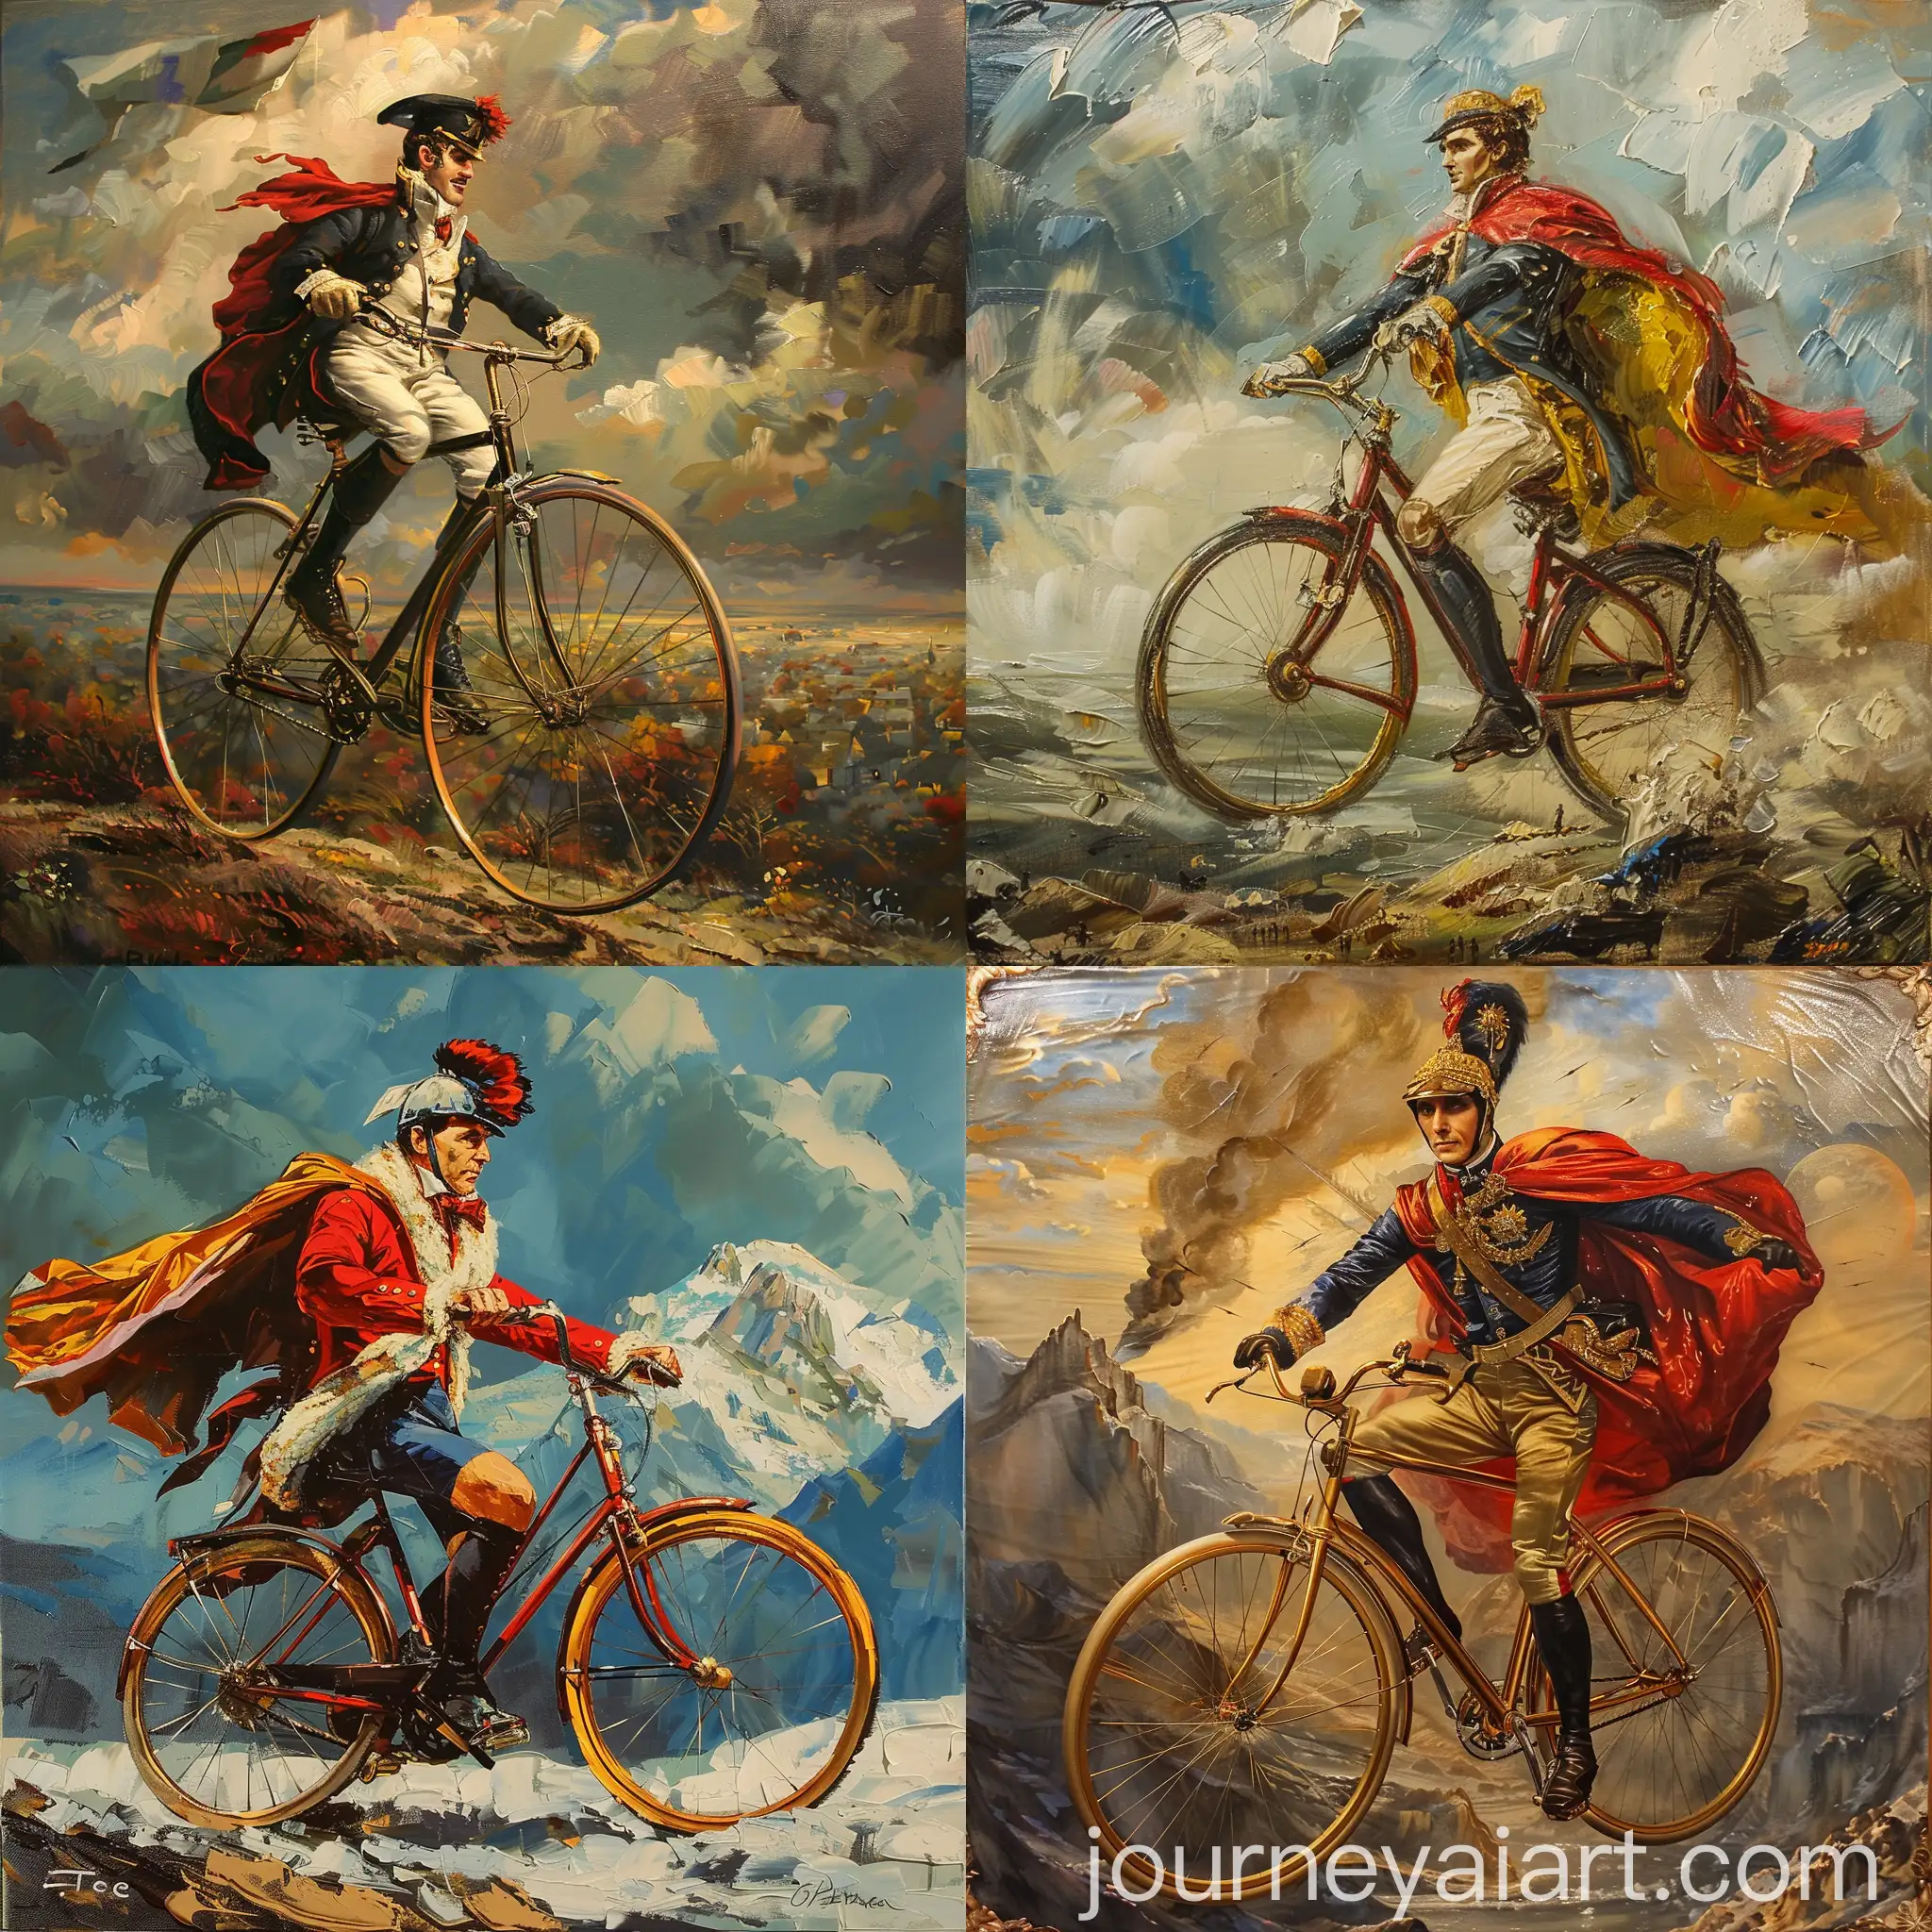 Napoleon-Bonaparte-Riding-Bicycle-in-Vintage-Parisian-Street-Scene